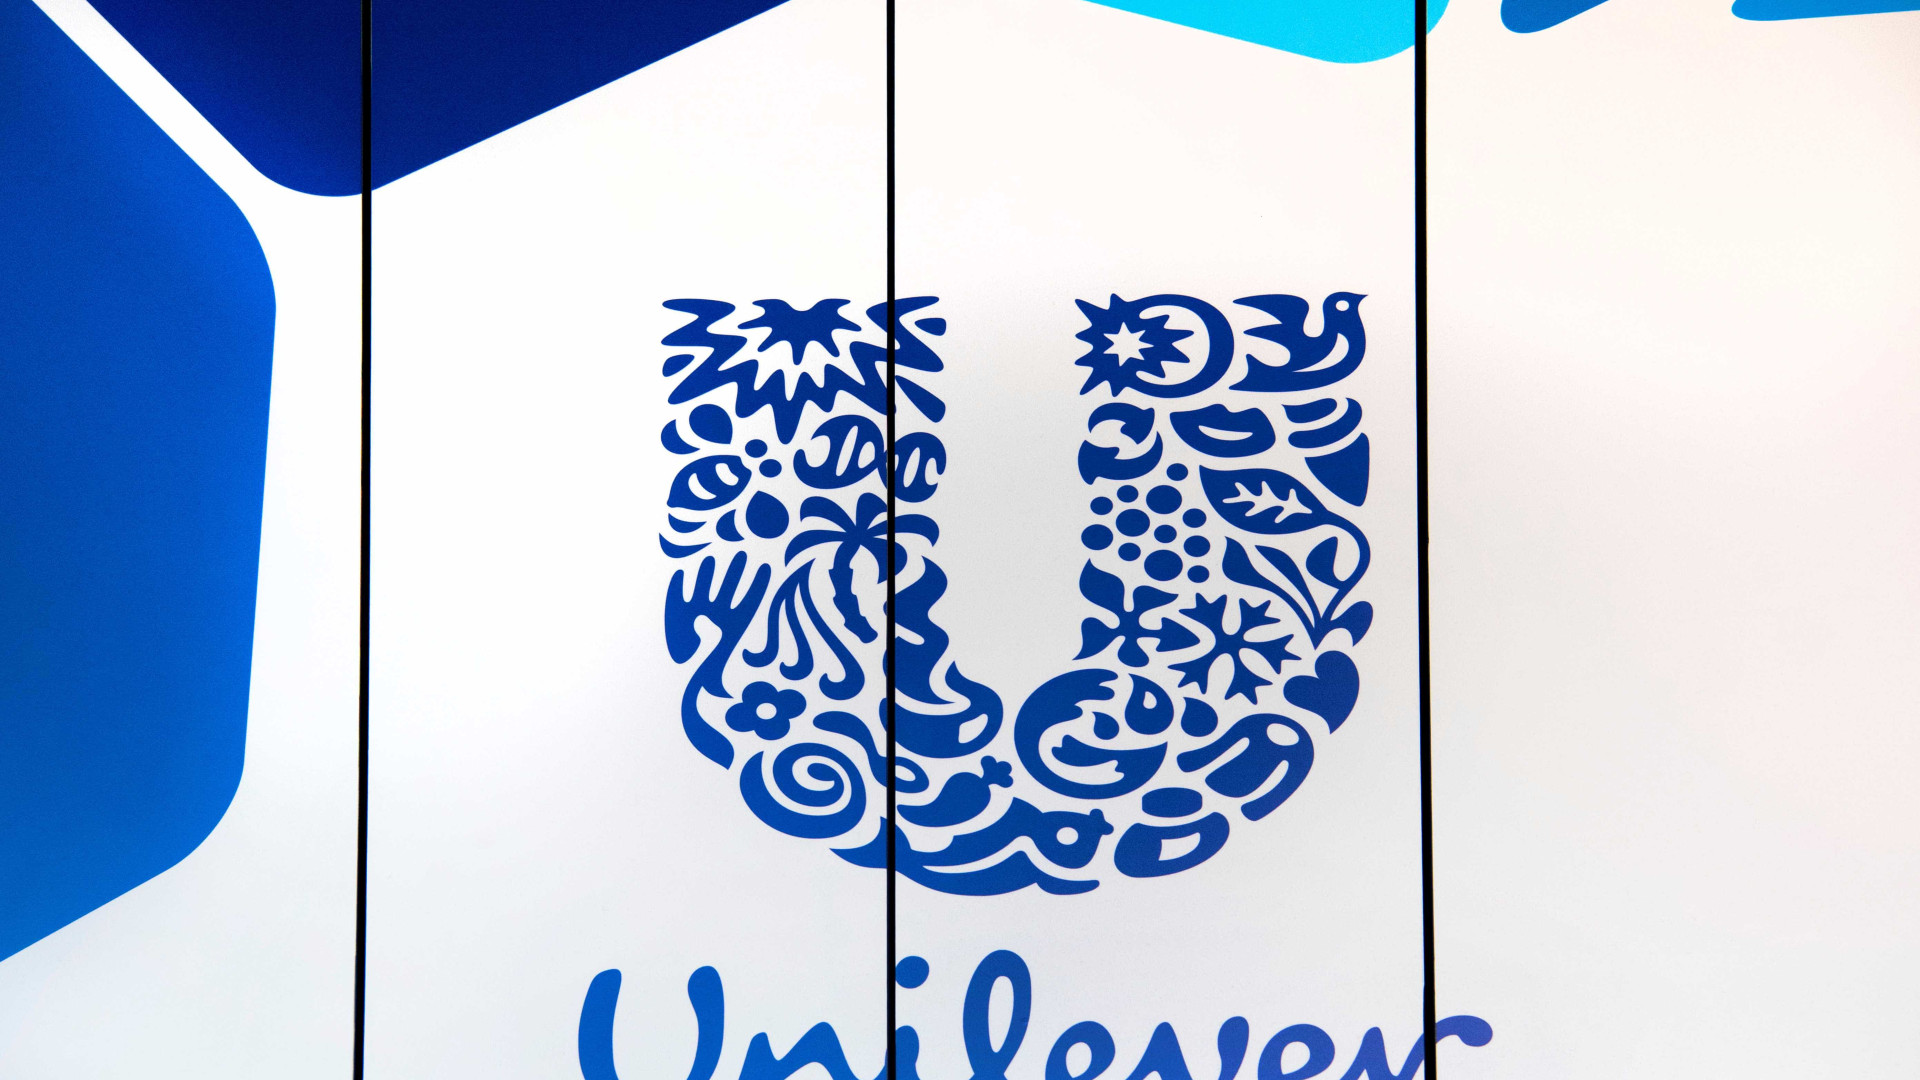 Cade condena Unilever por criar barreiras no mercado de sorvetes